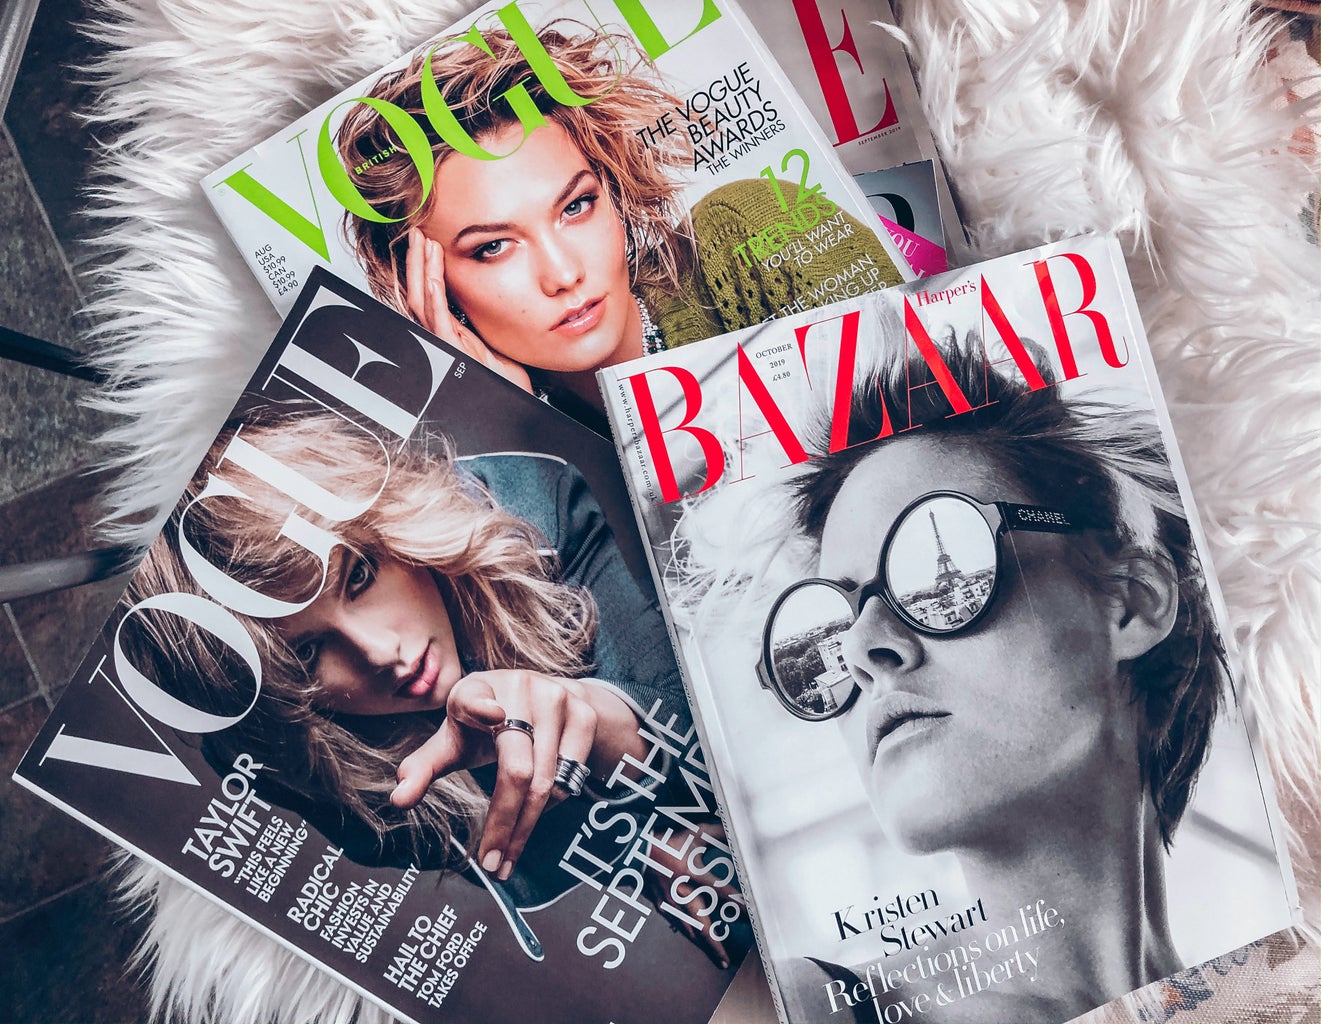 Vogue and Bazaar magazine covers